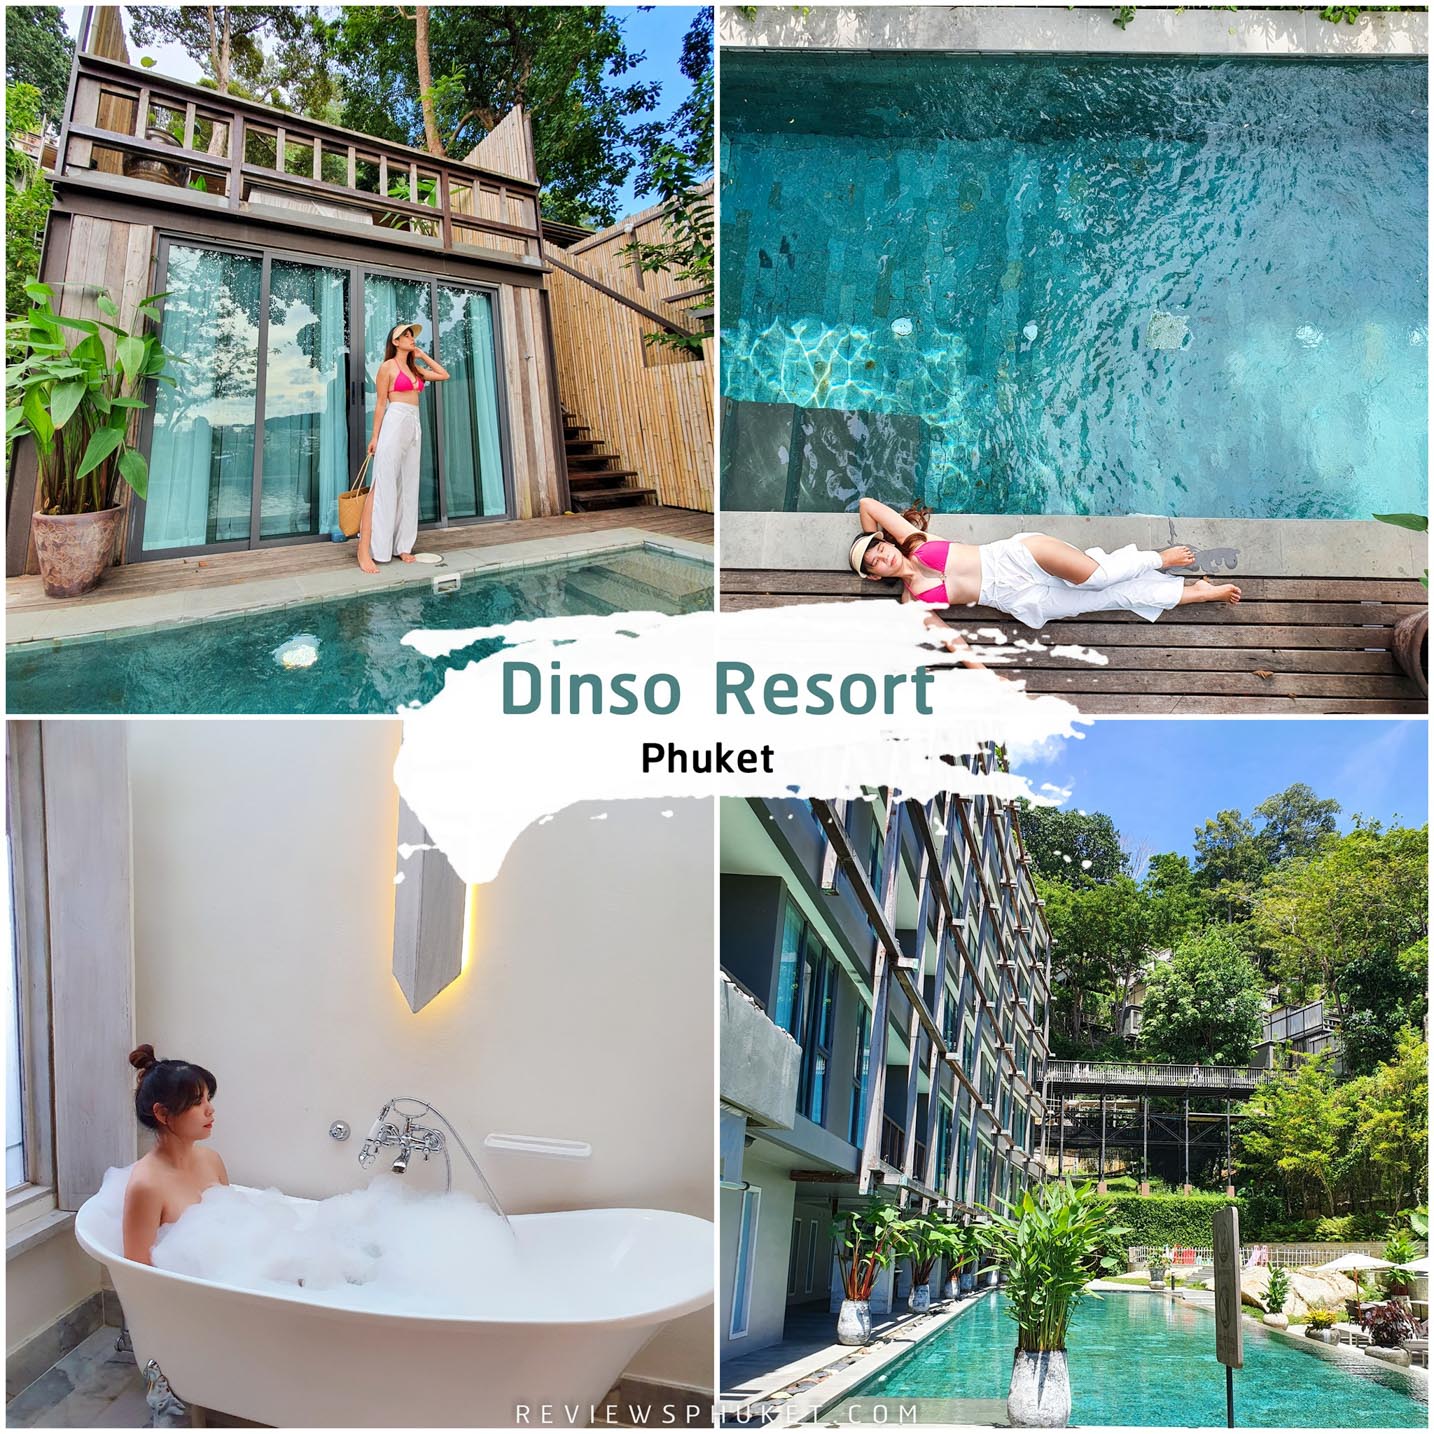 Dinso-Resort-Pool-Villa -บ้านต้นไม้สวยๆภูเก็ตแบบปังๆ-ตั้งอยู่โซนป่าตอง-บรรยากาศชิวๆ-กลางป่า-โรงแรมใช้วัสดุจากไม้มาทำห้องพัก-Type-:-ห้องพักมีดังนี้่--Superior---Deluxe--Family-Suite-Two-Bedroom---Penthouse-Triple-Private-Terrace-และ-Pool-Villa-บอกเลยต้องมาเช็คอินน ที่พักภูเก็ต,ที่พักหรู,วิวหลักล้าน,ริมทะเล,โรงแรม,รีสอร์ท,Phuket,หาดสวย,น้ำใส